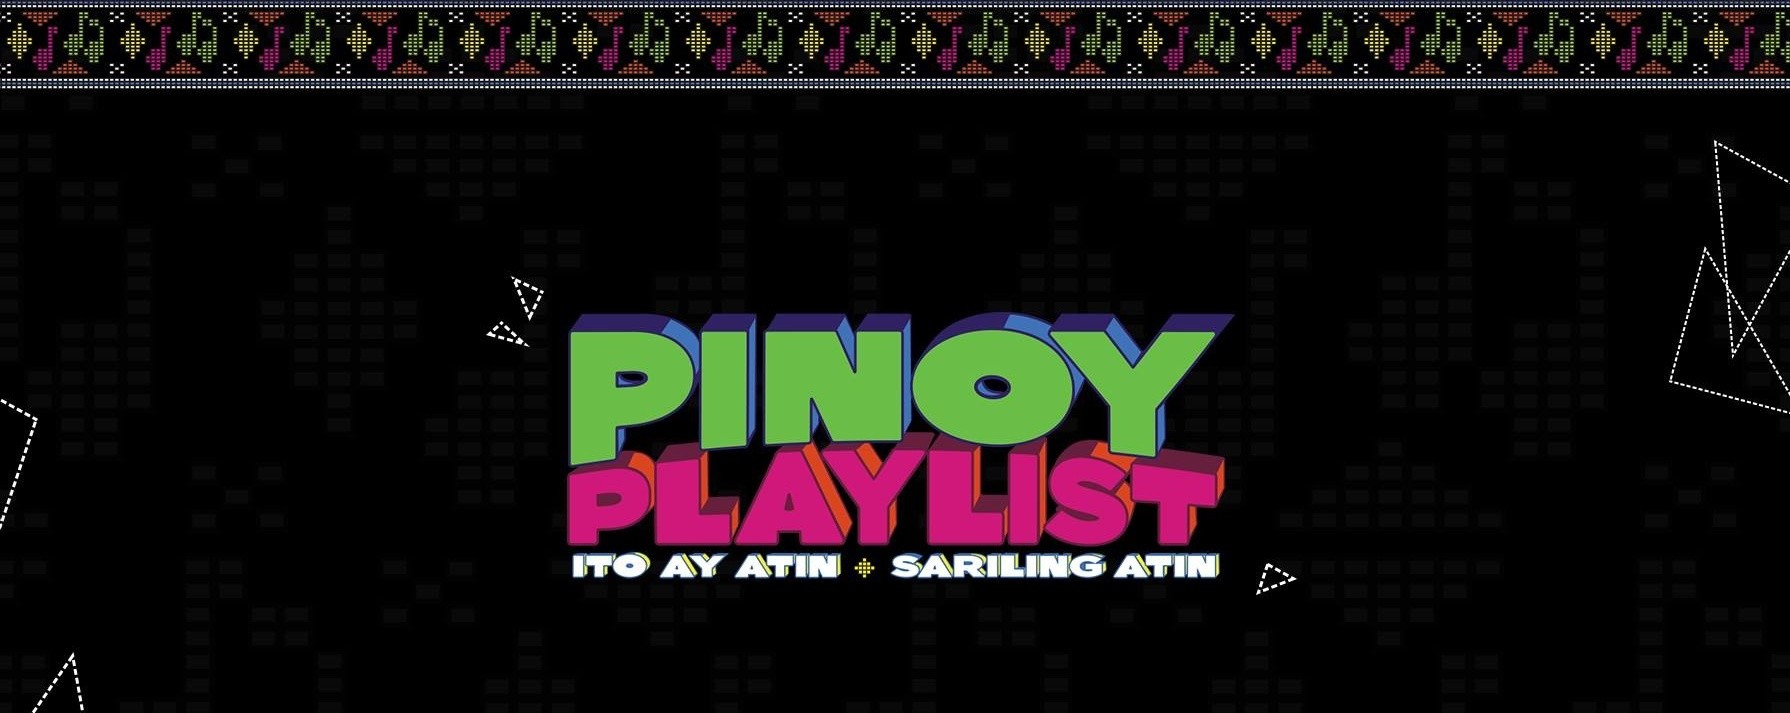 Pinoy Playlist 2018